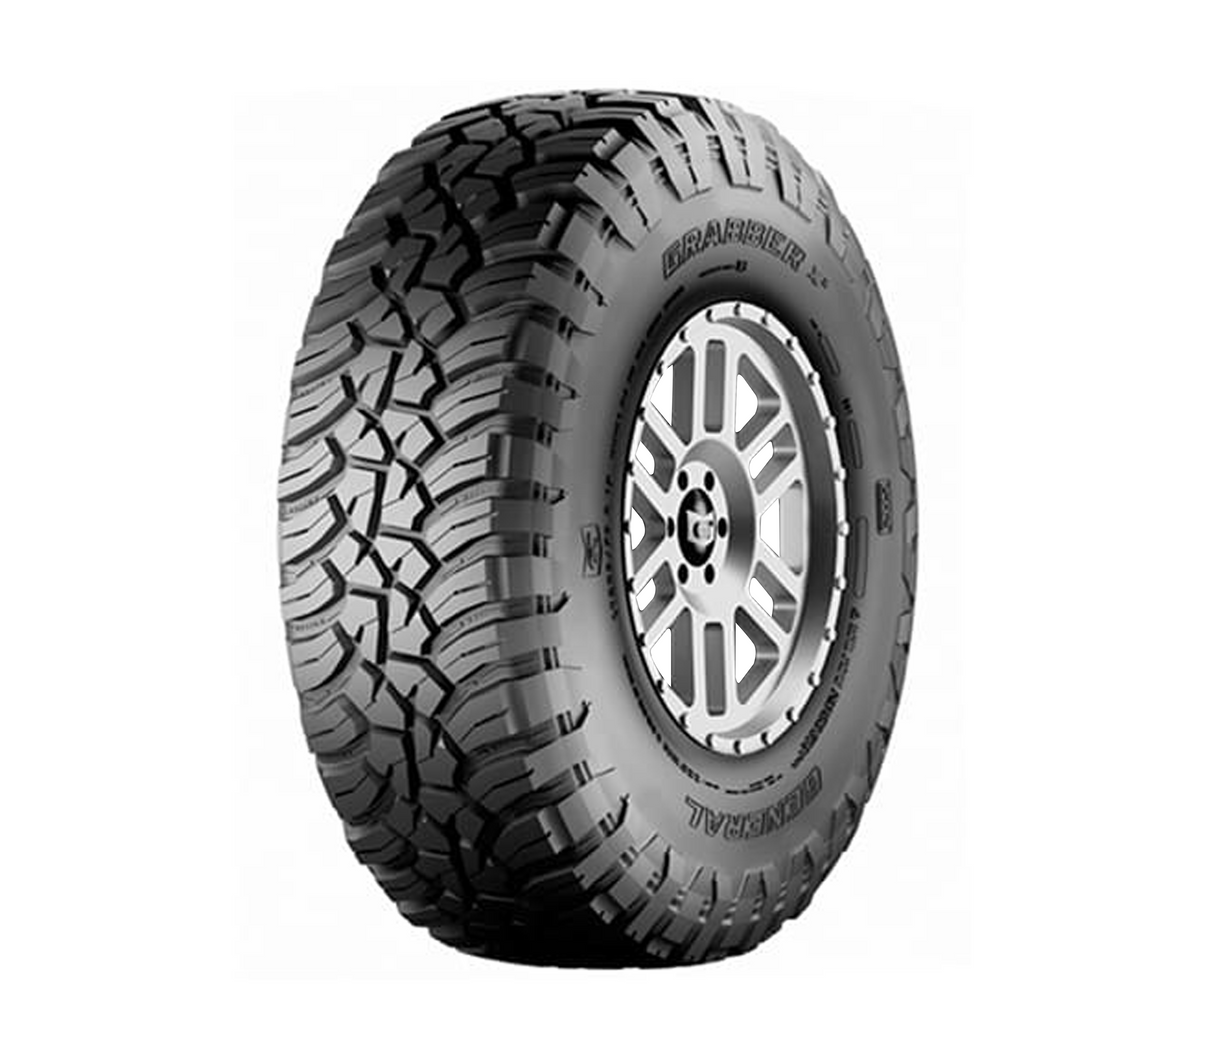 Neumático 245/75R16 120/116Q Grabber X3 General Tire